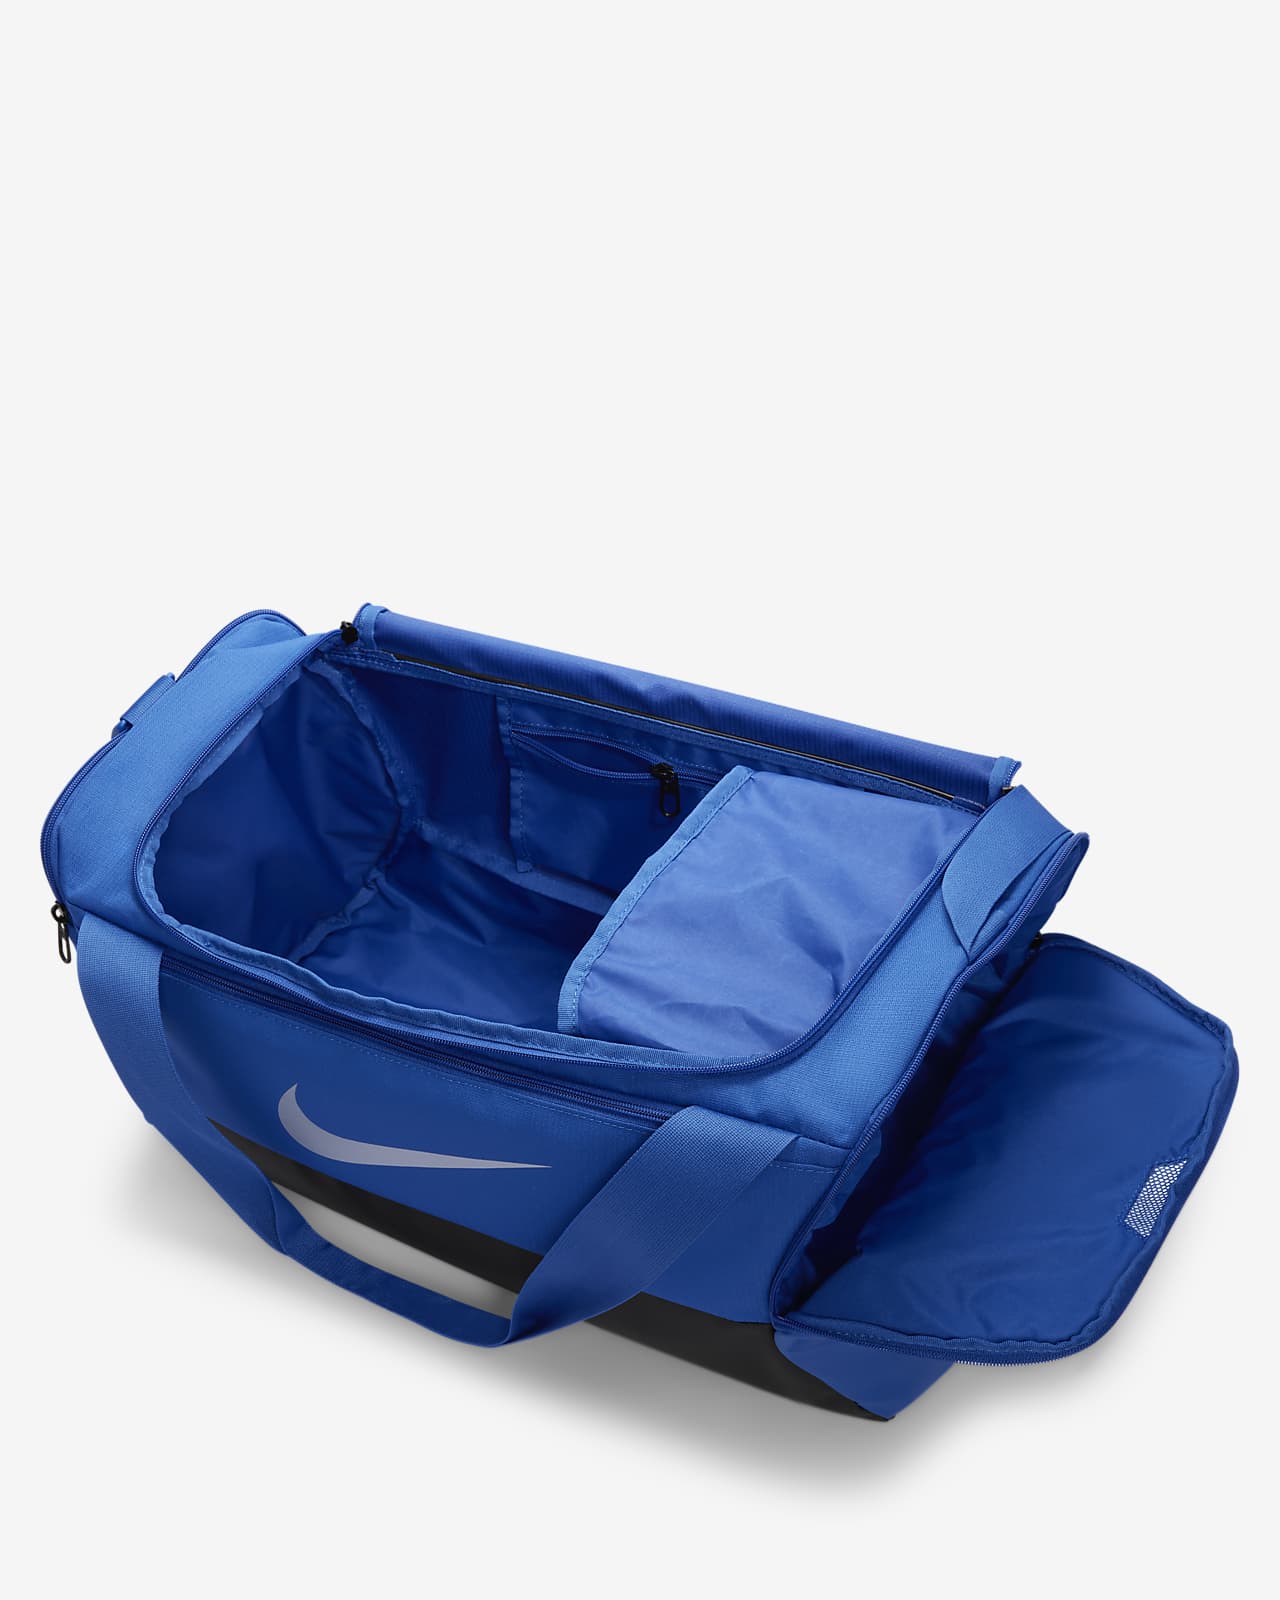 Nike Brasilia 9.5 Training Duffel Bag (Small, 41L). Nike BE